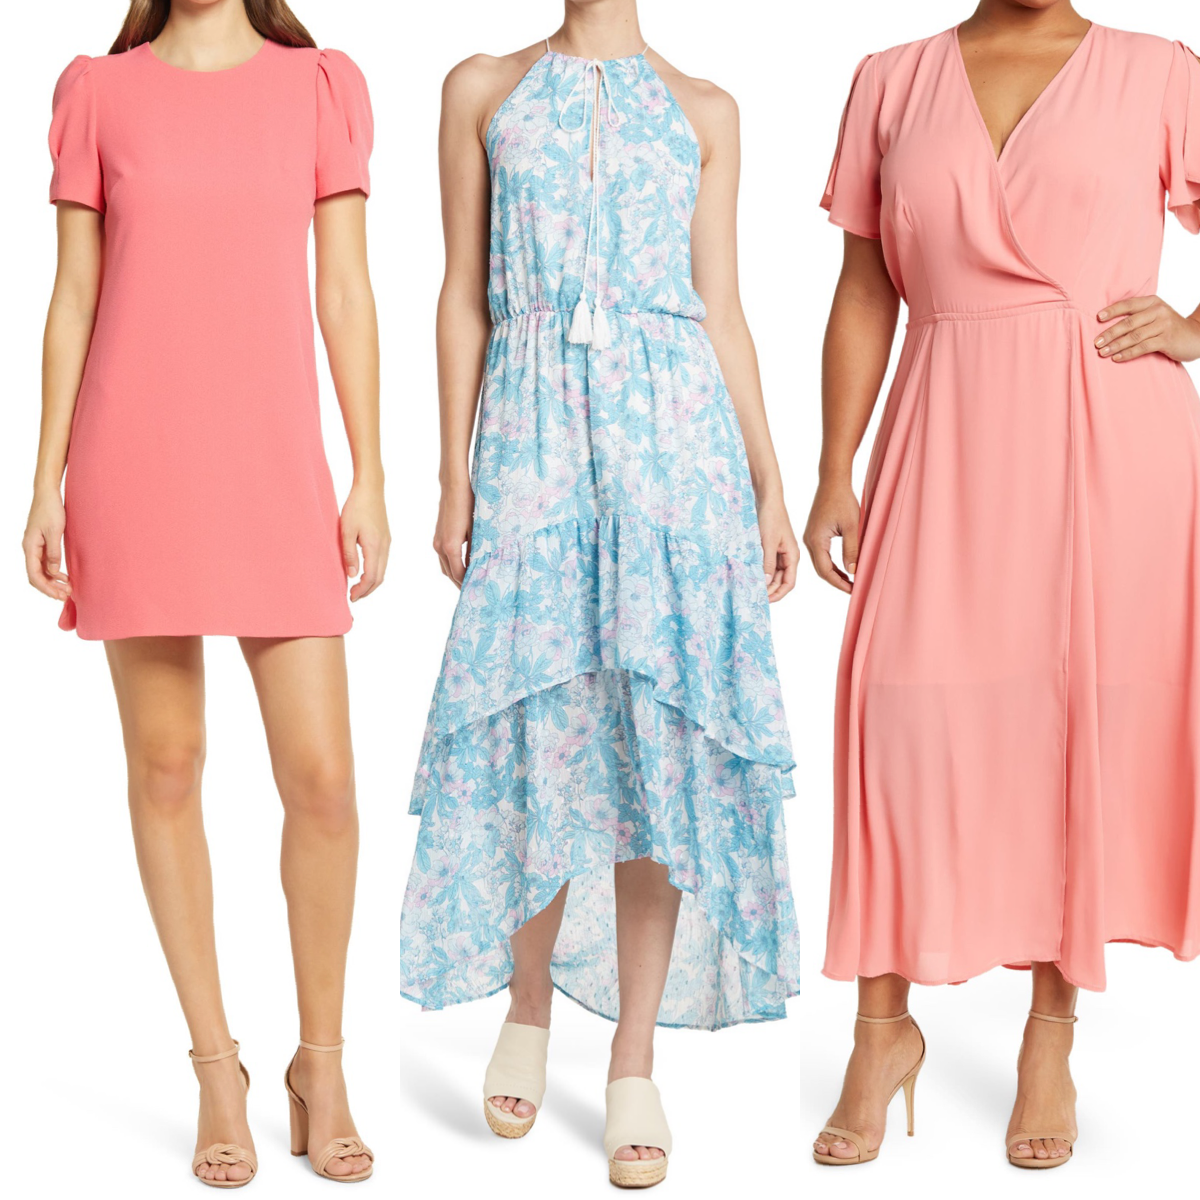 Nordstrom Rack Sale: Spring dresses are up to 65% off, find your favorites  for under $50 